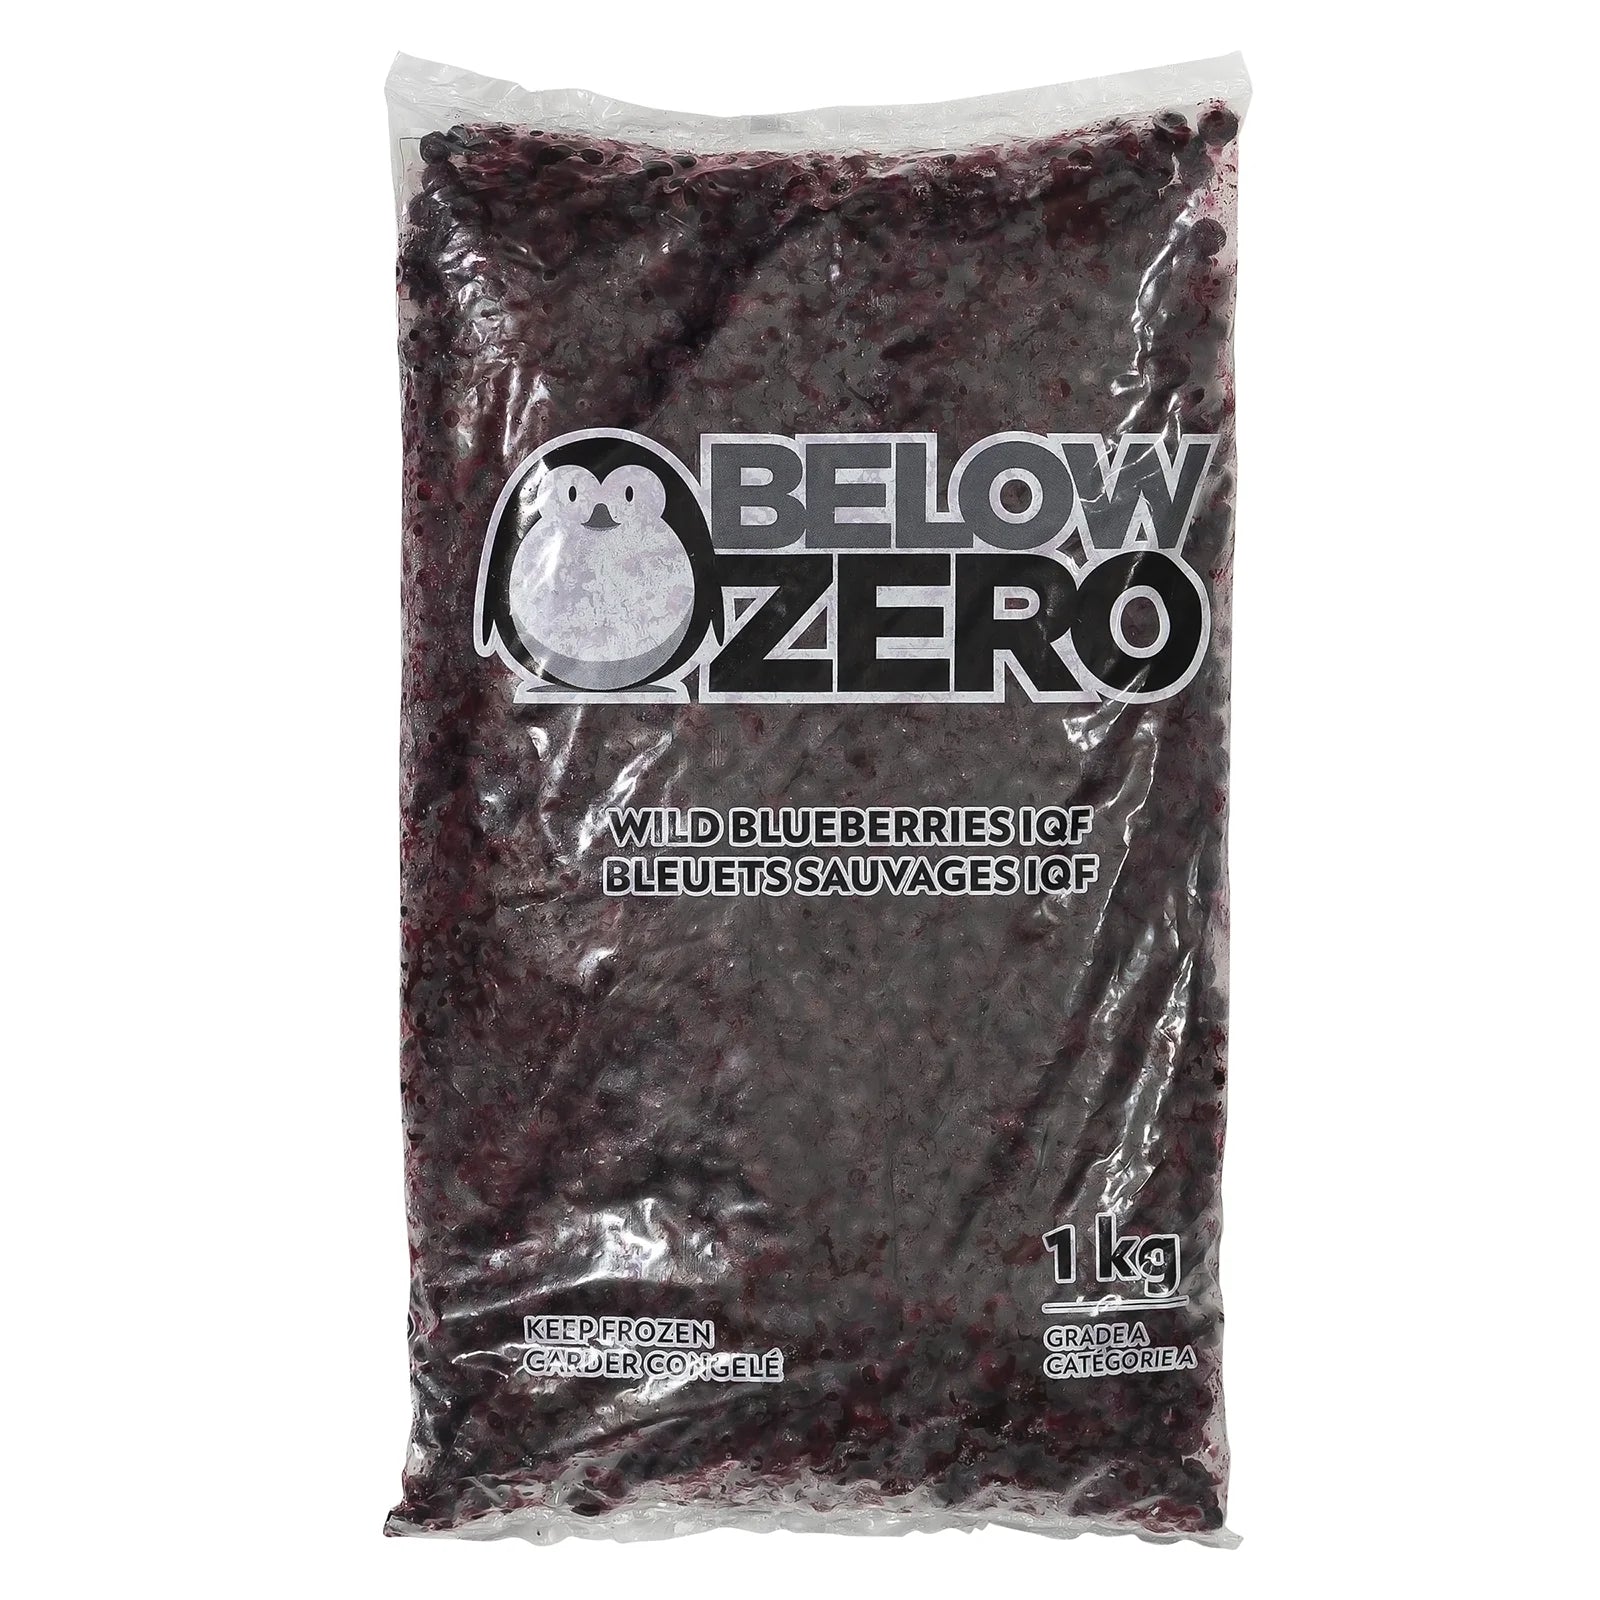 Below Zero - IQF Wild Blueberry